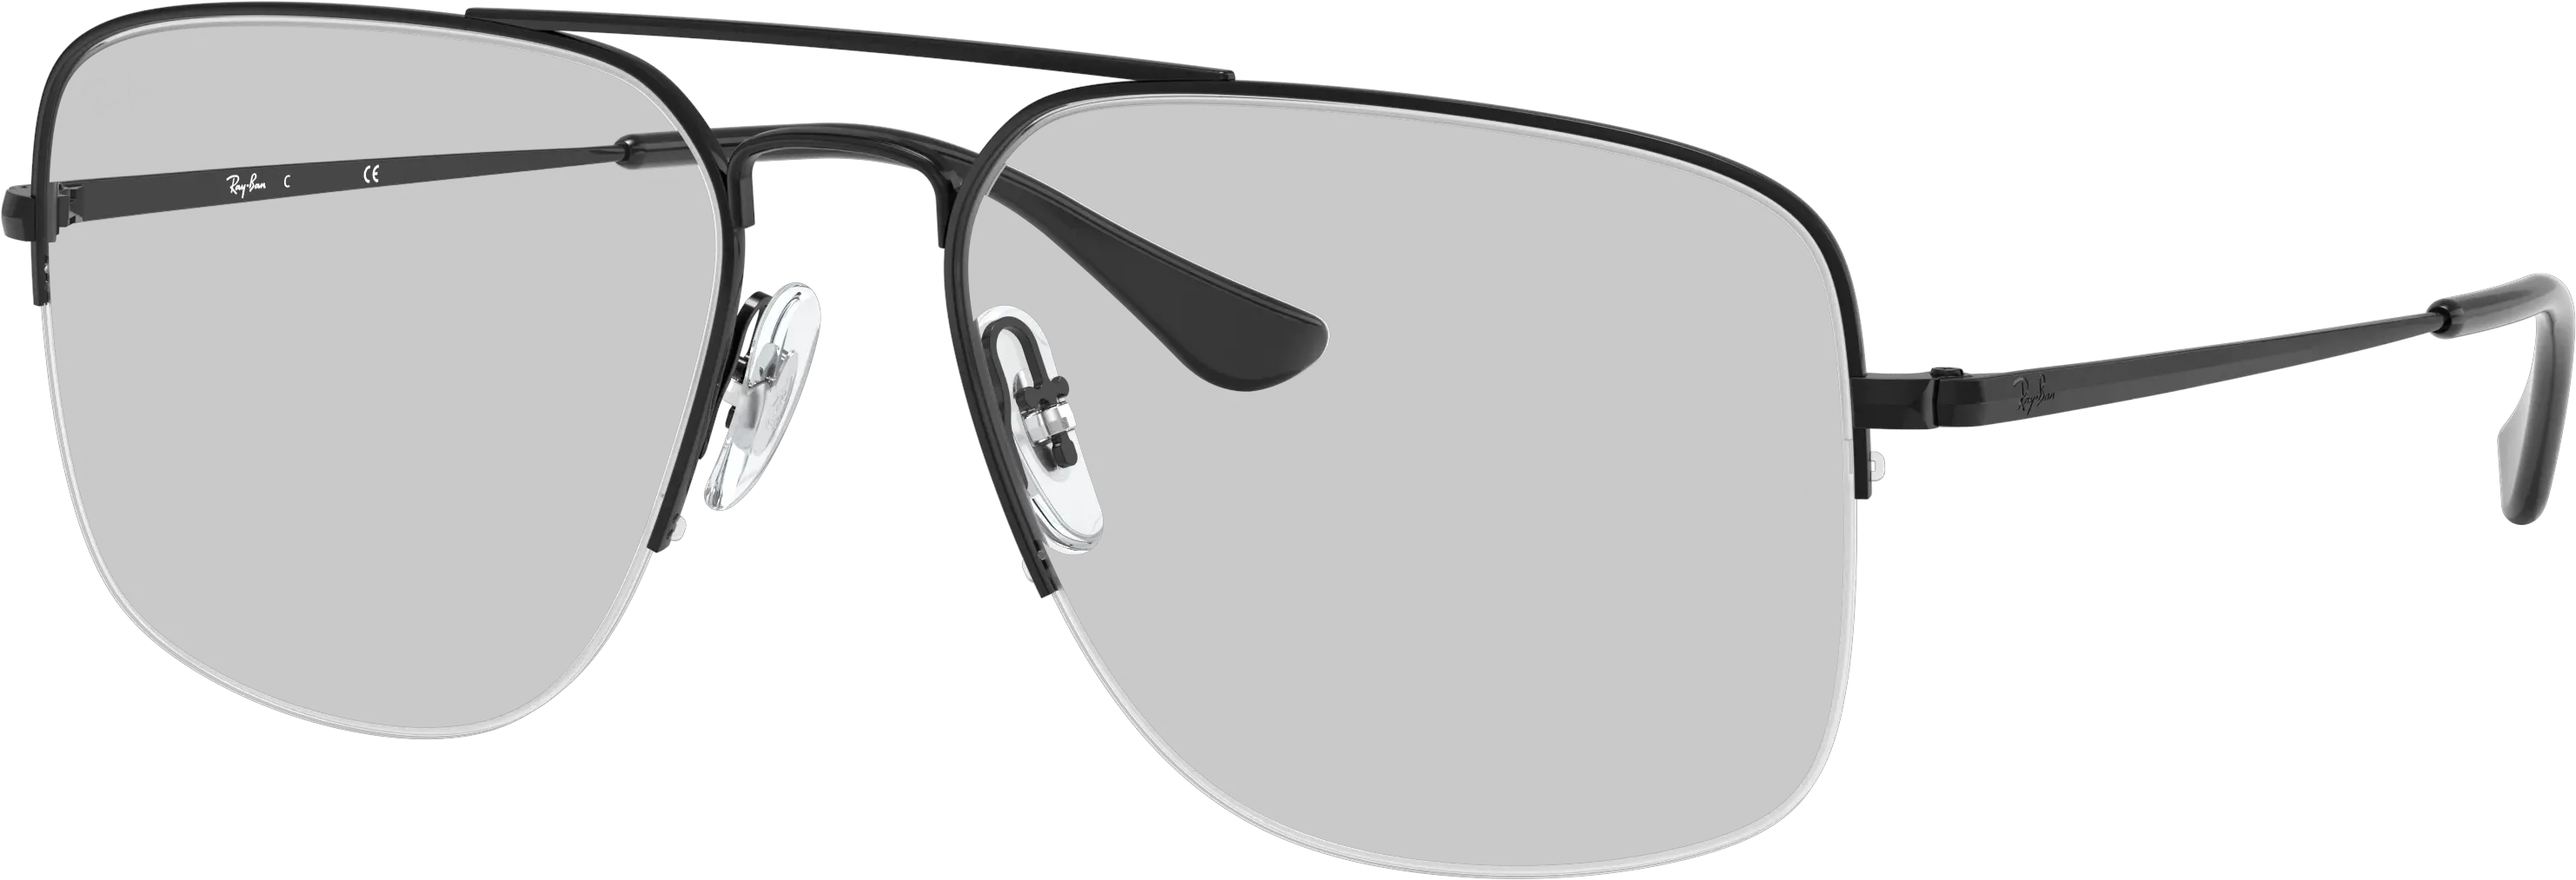 General Gaze Eyeglasses With Black Frame Ray Ban Full Rim Png Silhouette Rimless 7581 Titan Minimal Art The Icon